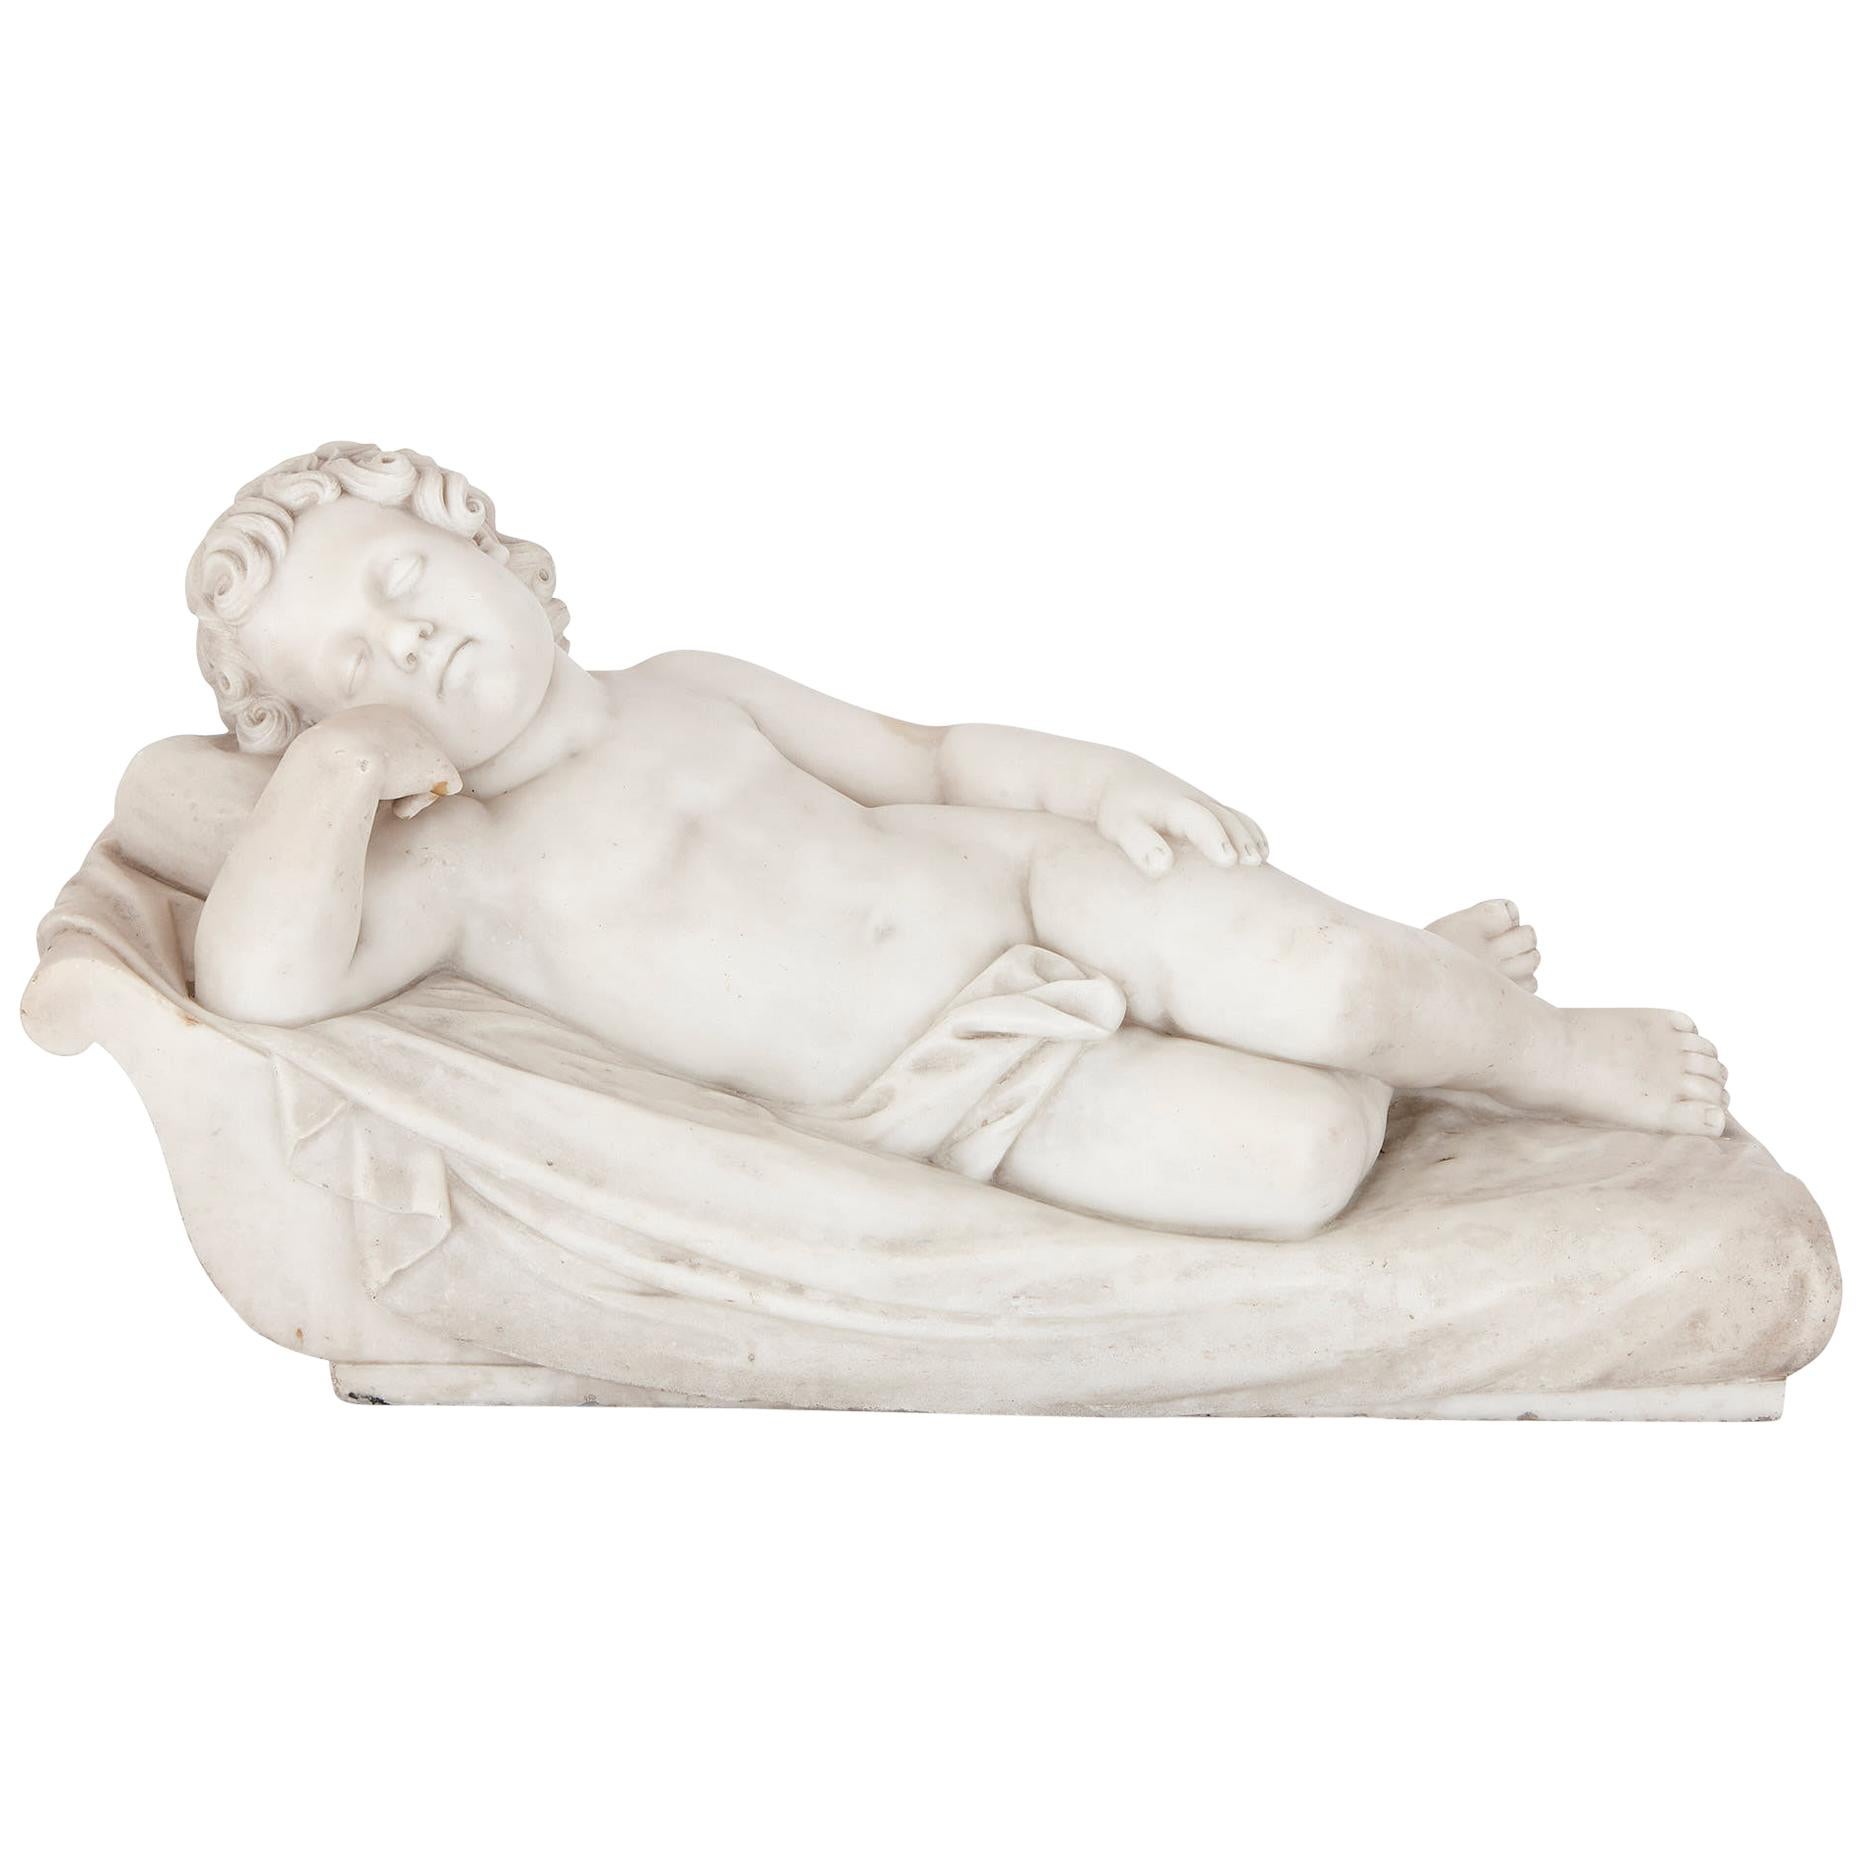 Renaissance Style Marble Figure of Sleeping Child